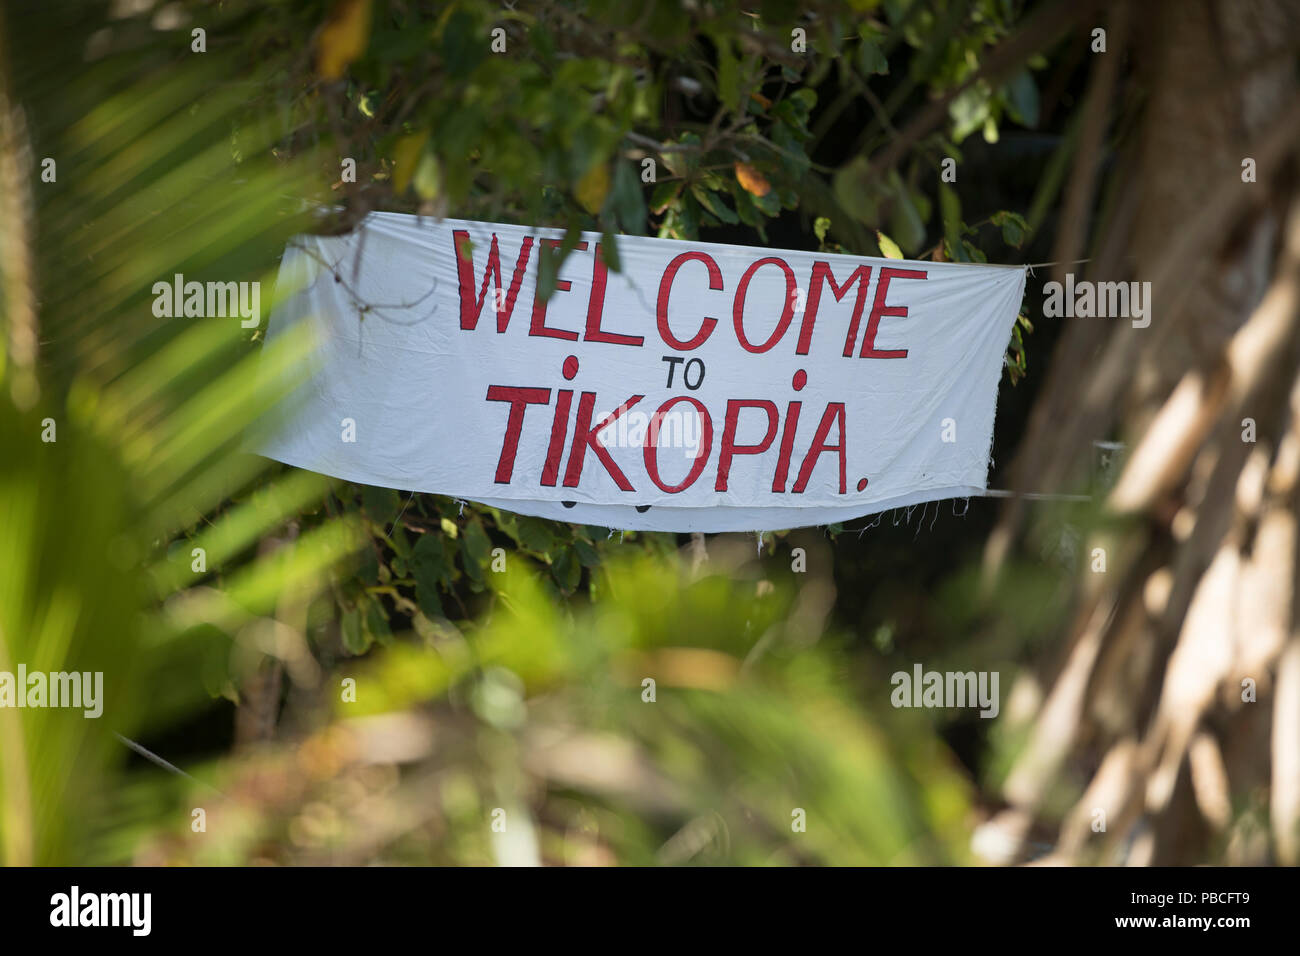 Welcome to Tikopia sign, Solomon Islands Stock Photo